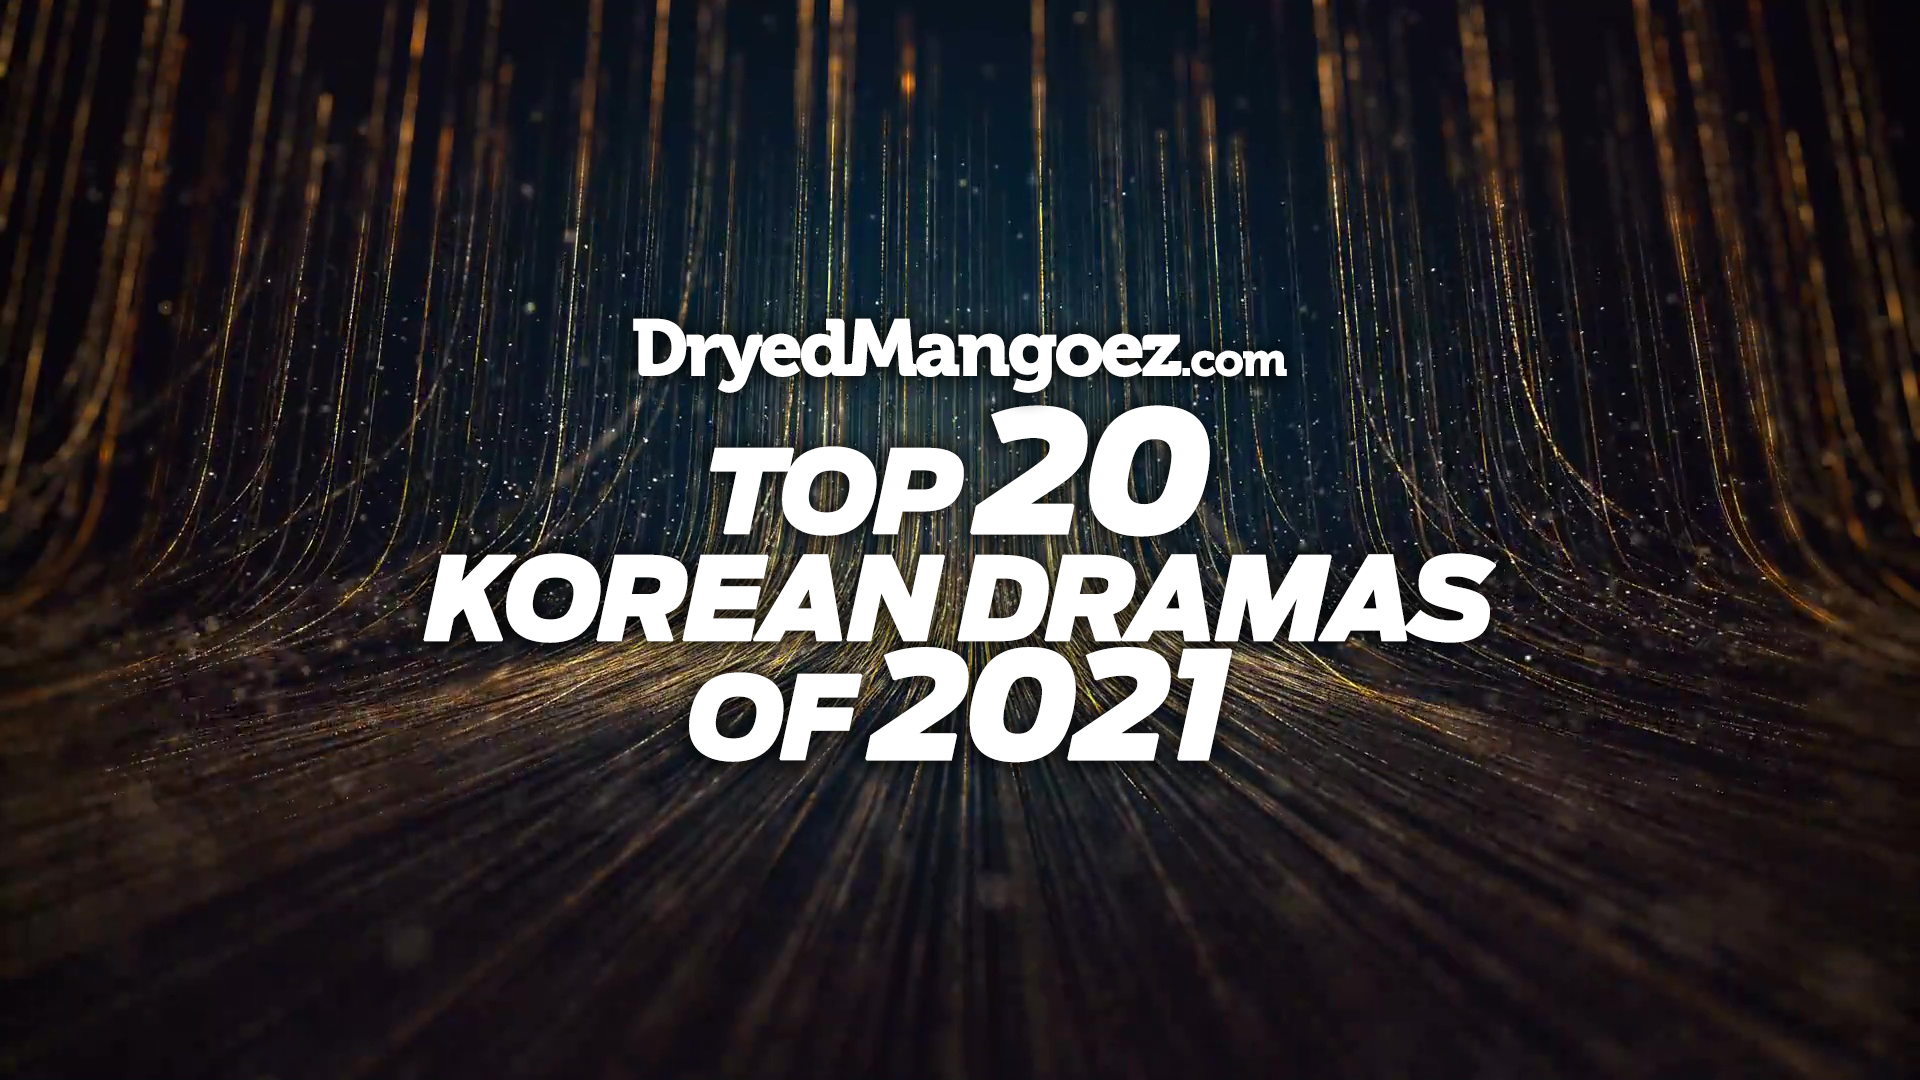 My Top 20 Favorite Korean Dramas of 2021!